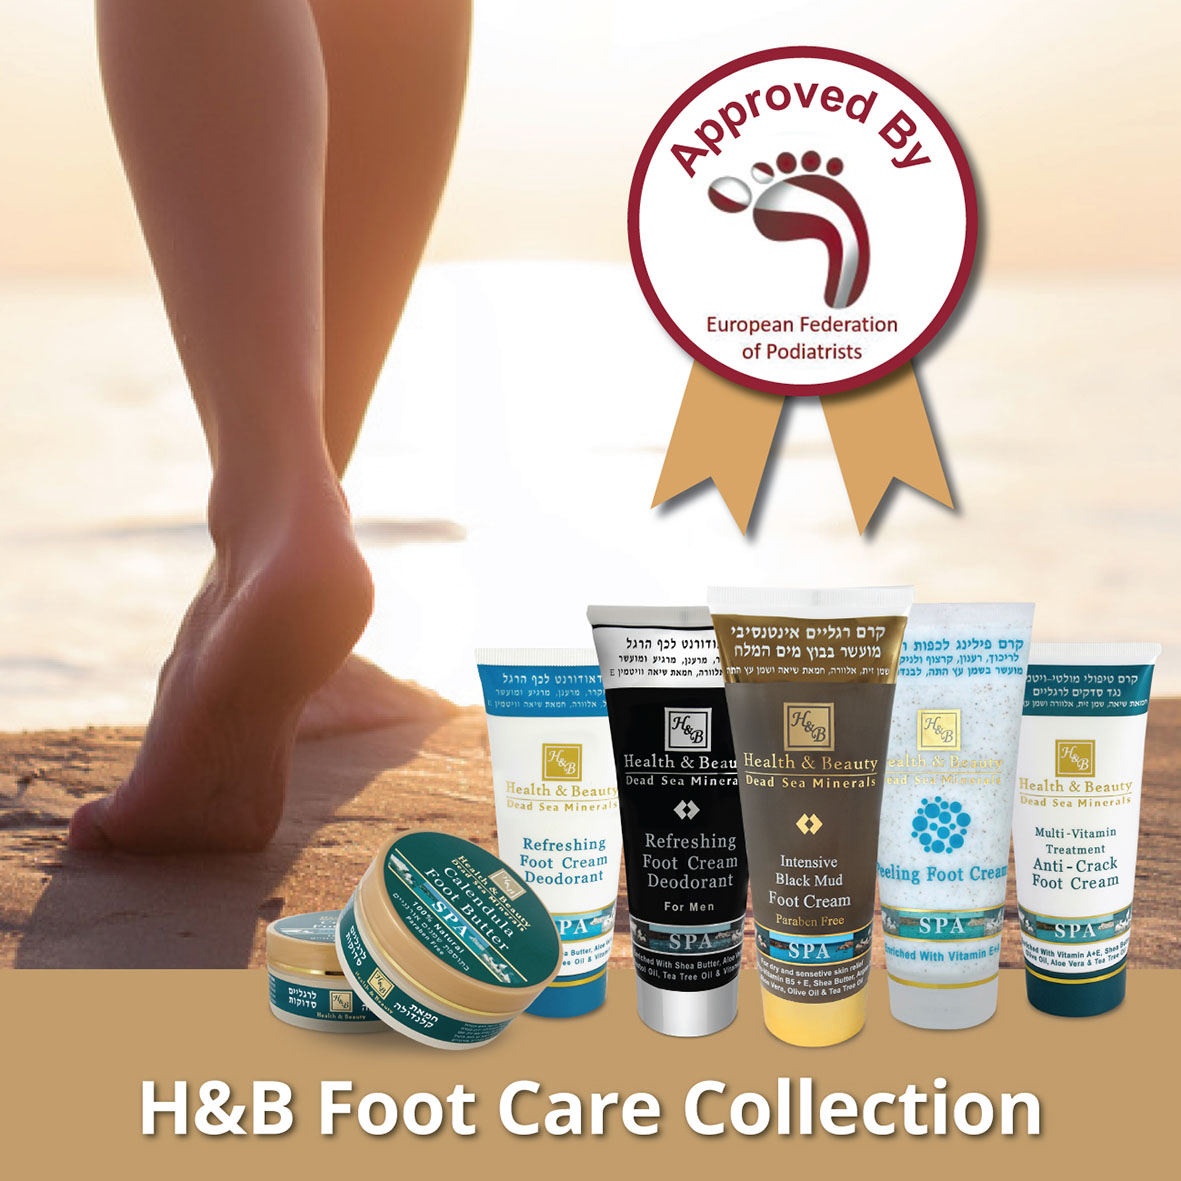 H&B summer foot care tips